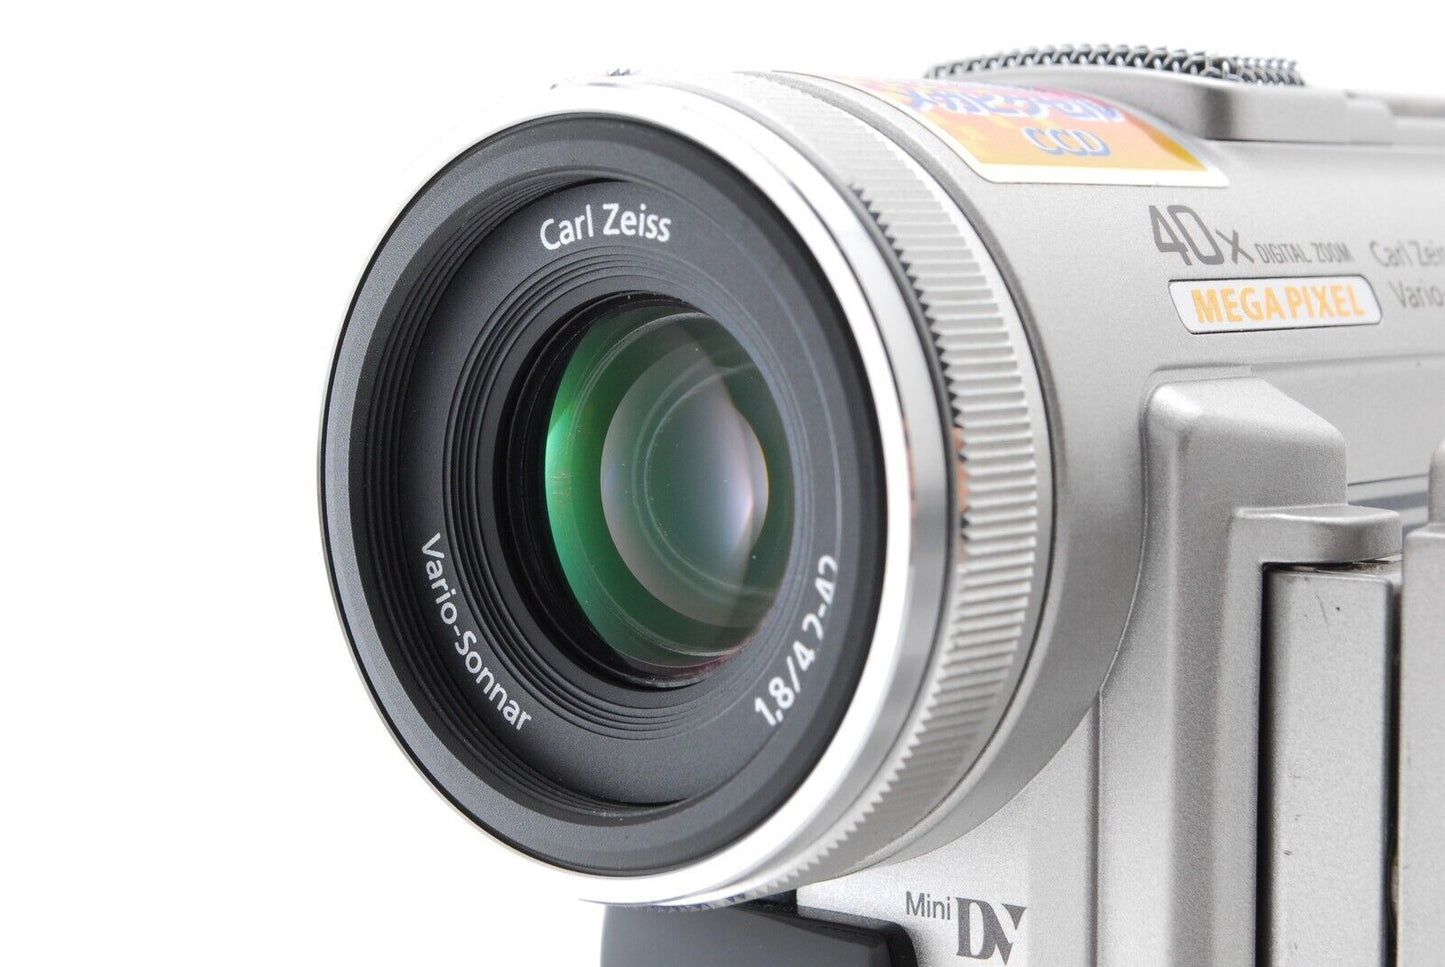 Sony Handycam DCR-PC100 Mini DV Camcorder Carl Zeiss Lens